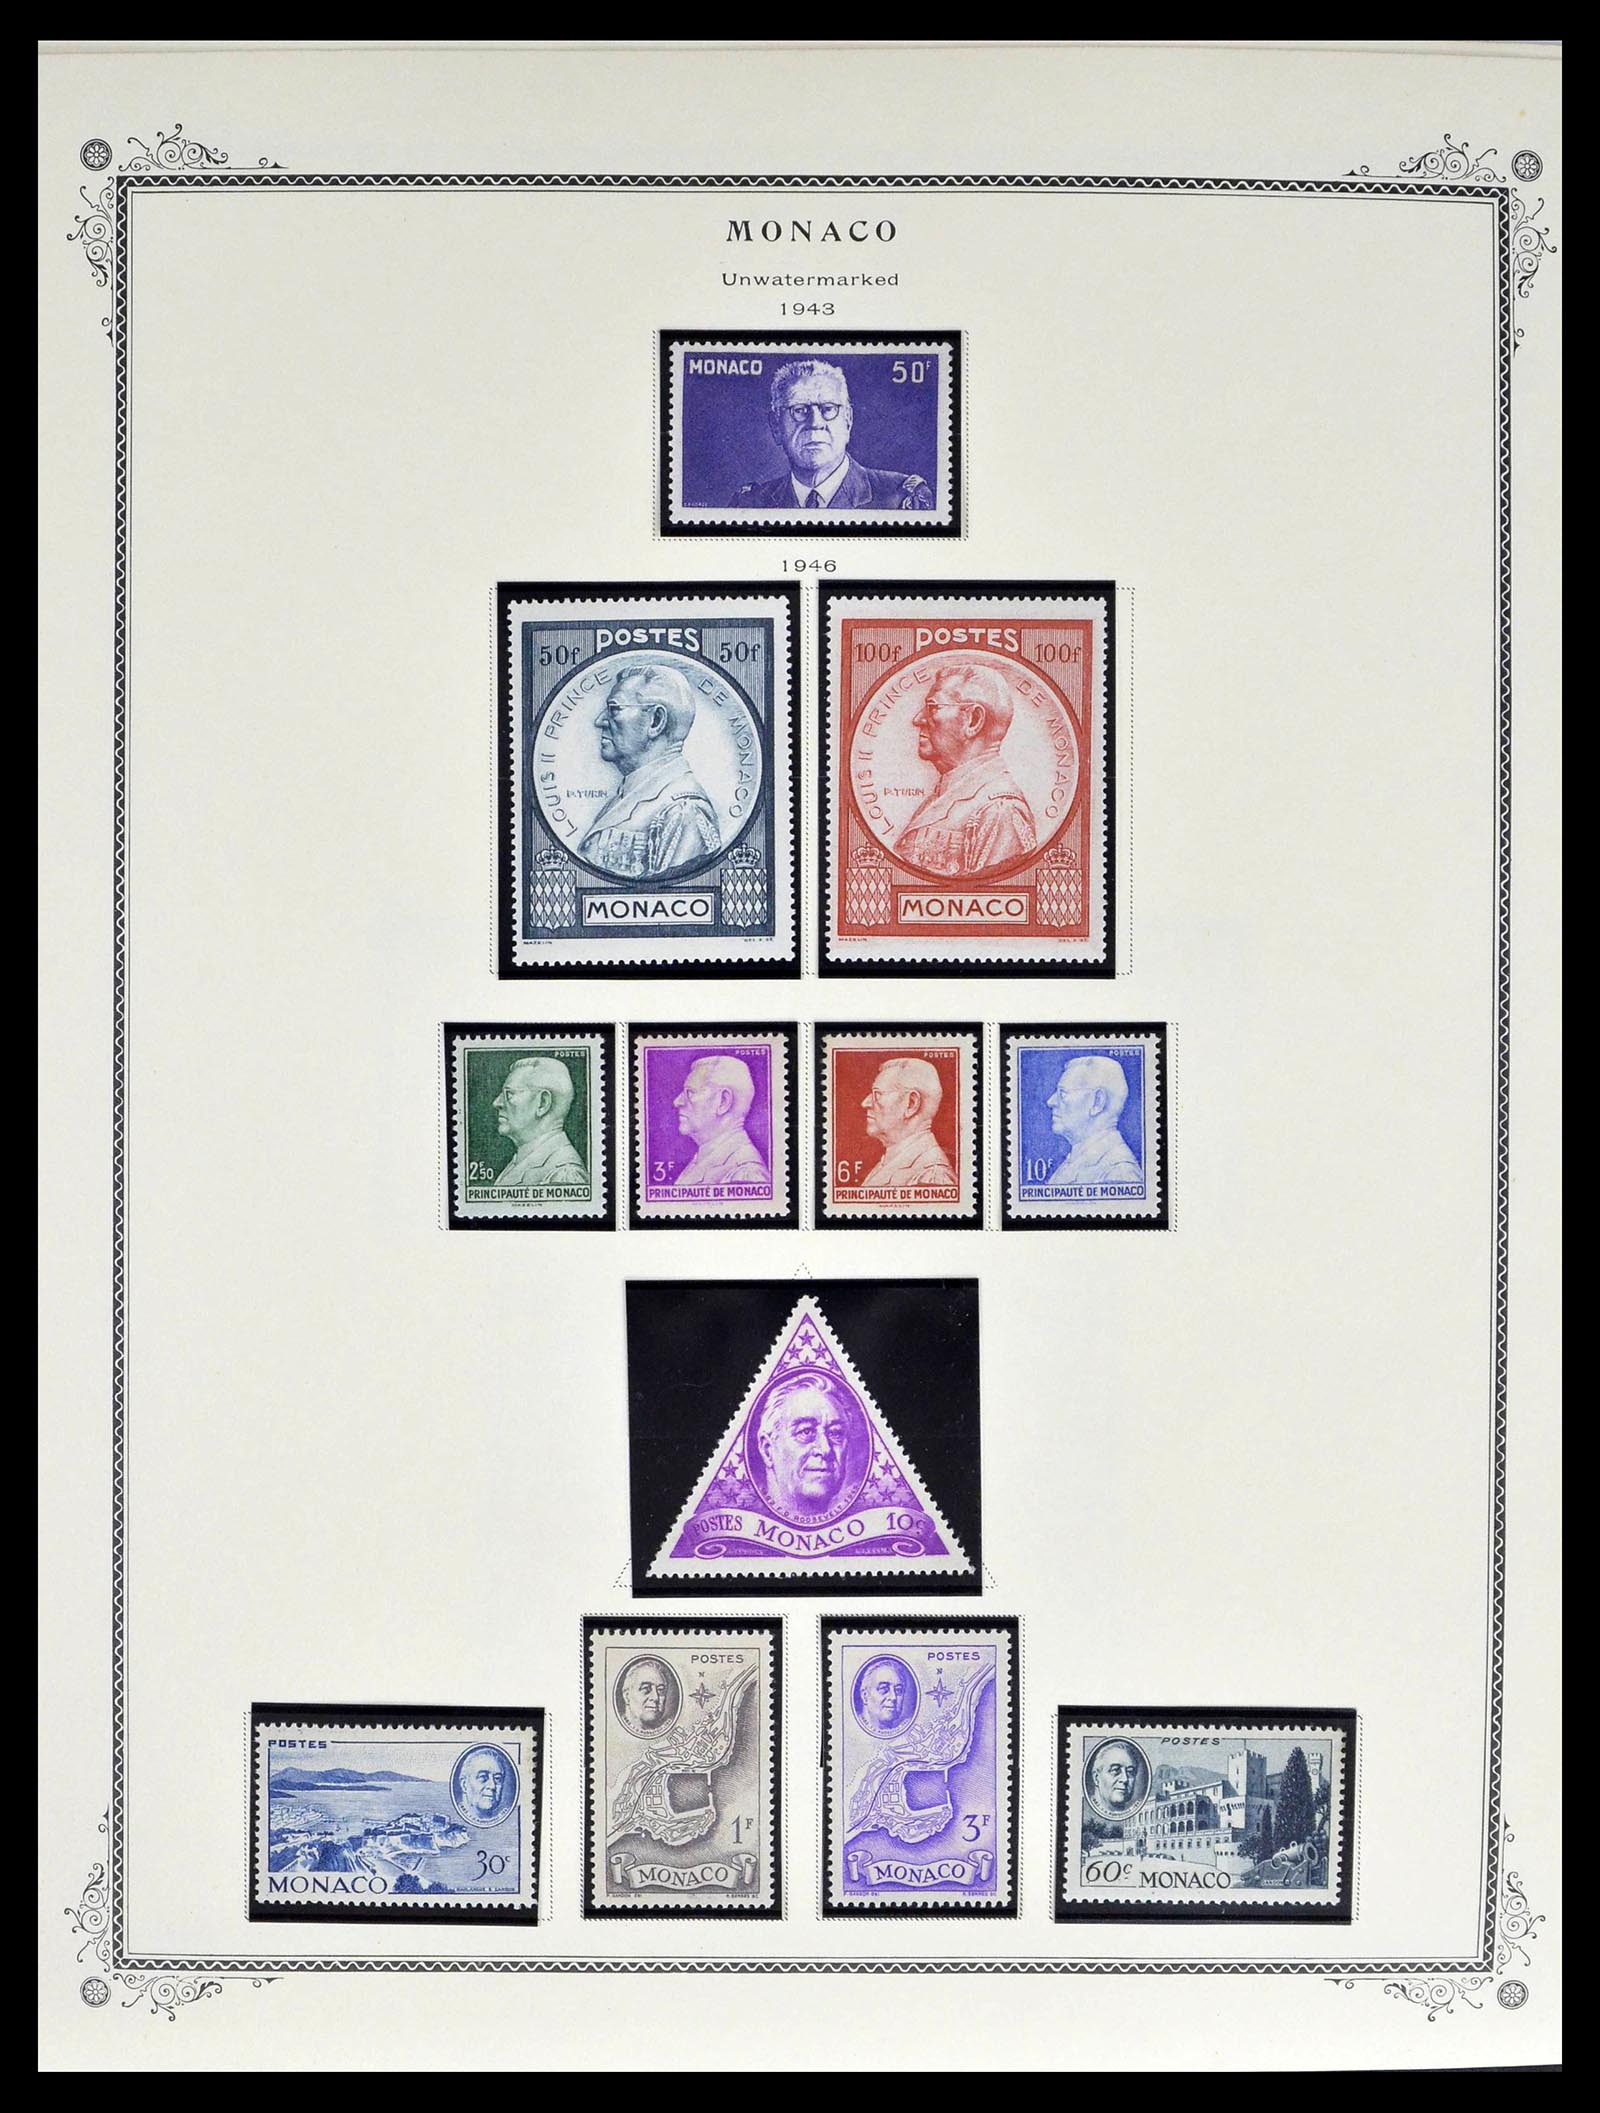 39181 0022 - Stamp collection 39181 Monaco 1885-1980.